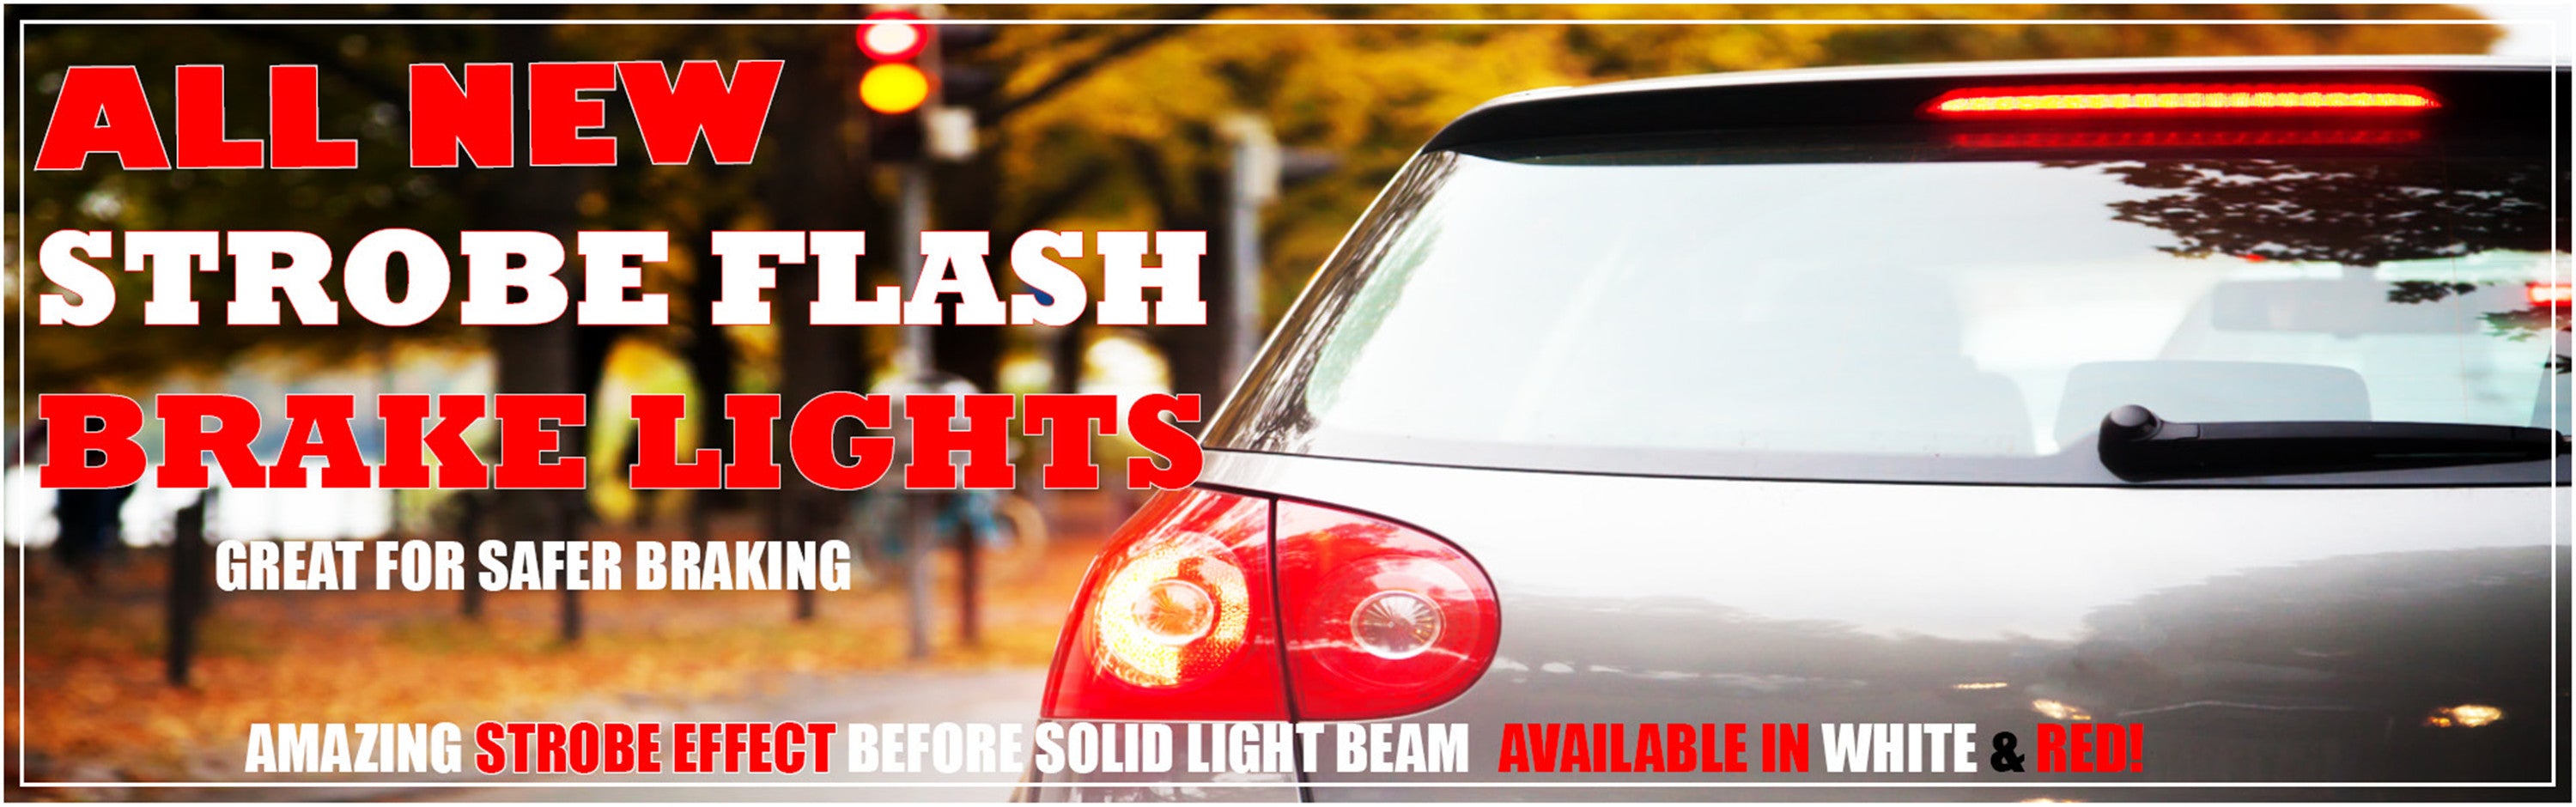 DIY Middle Finger LED Light, Car Accessories LED Sign Light with